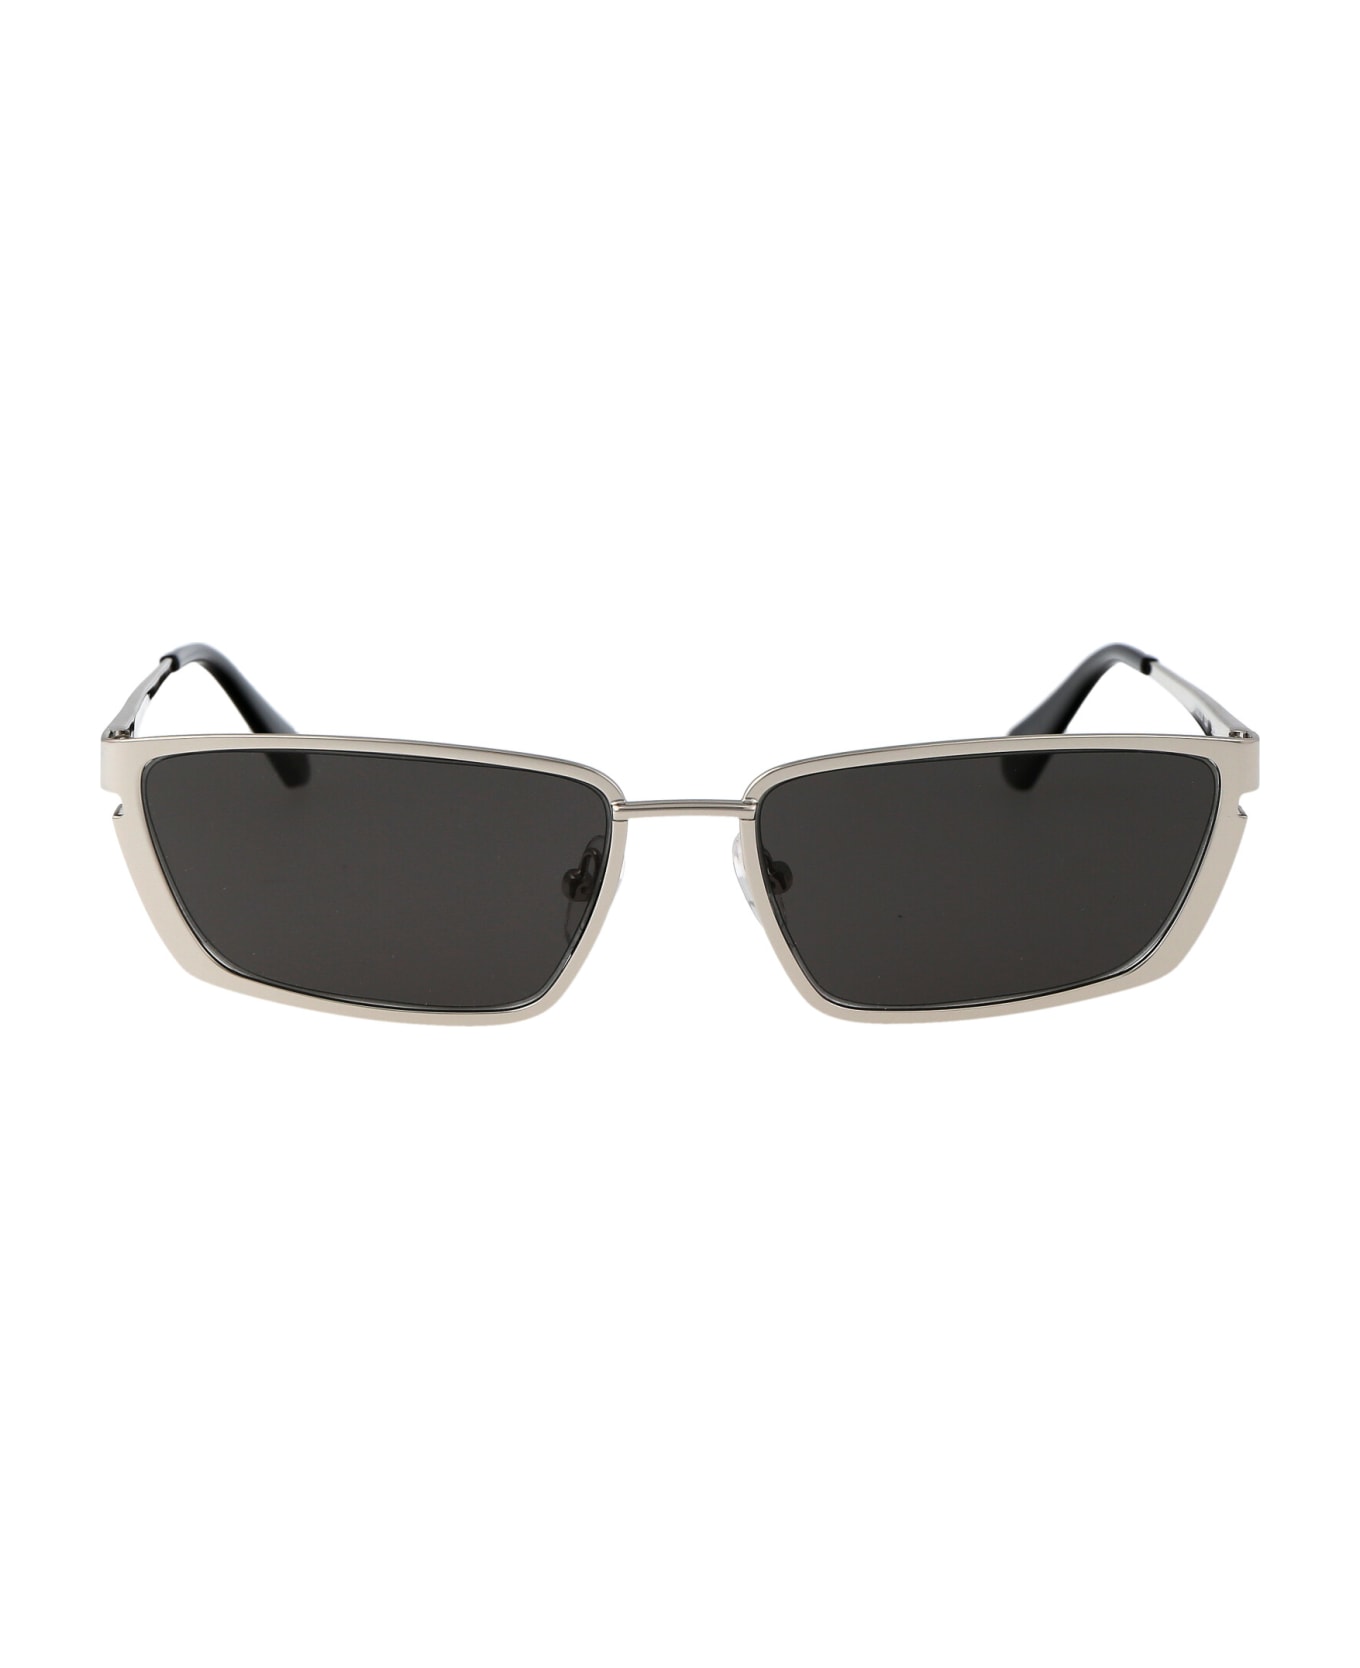 Off-White Richfield Sunglasses - 7207 SILVER サングラス